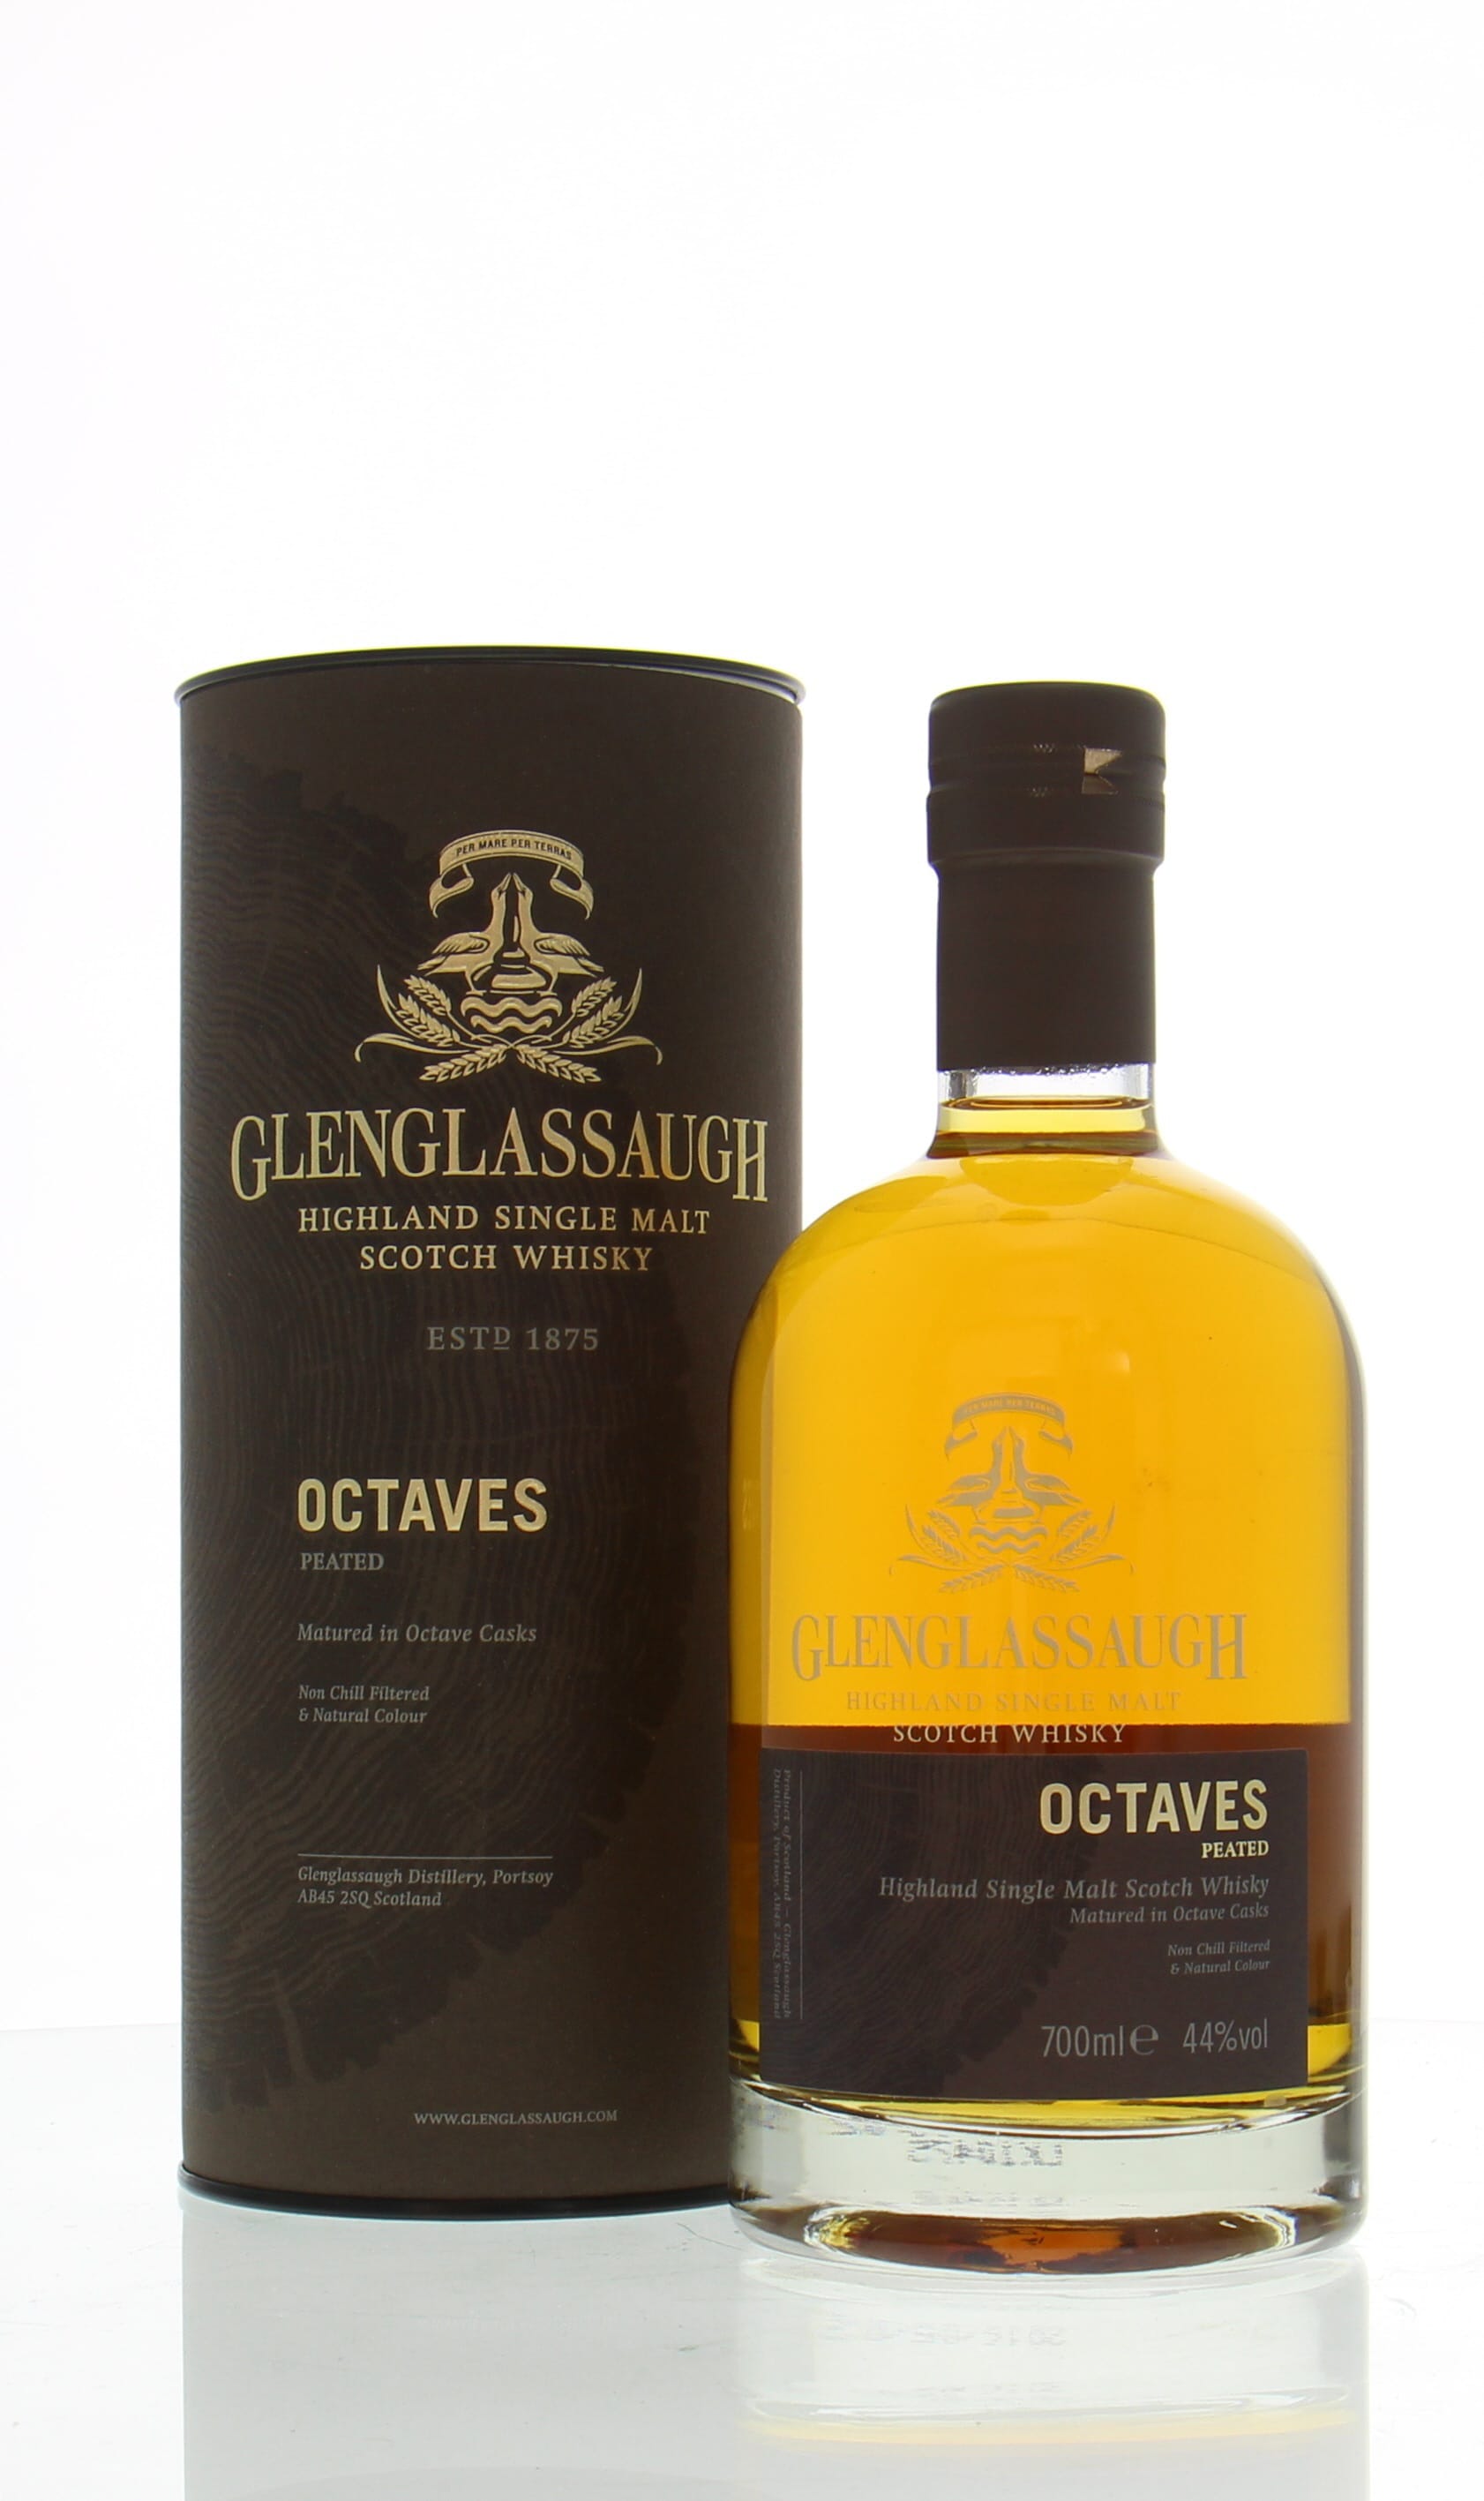 Glenglassaugh - Octaves Peated 44% NV